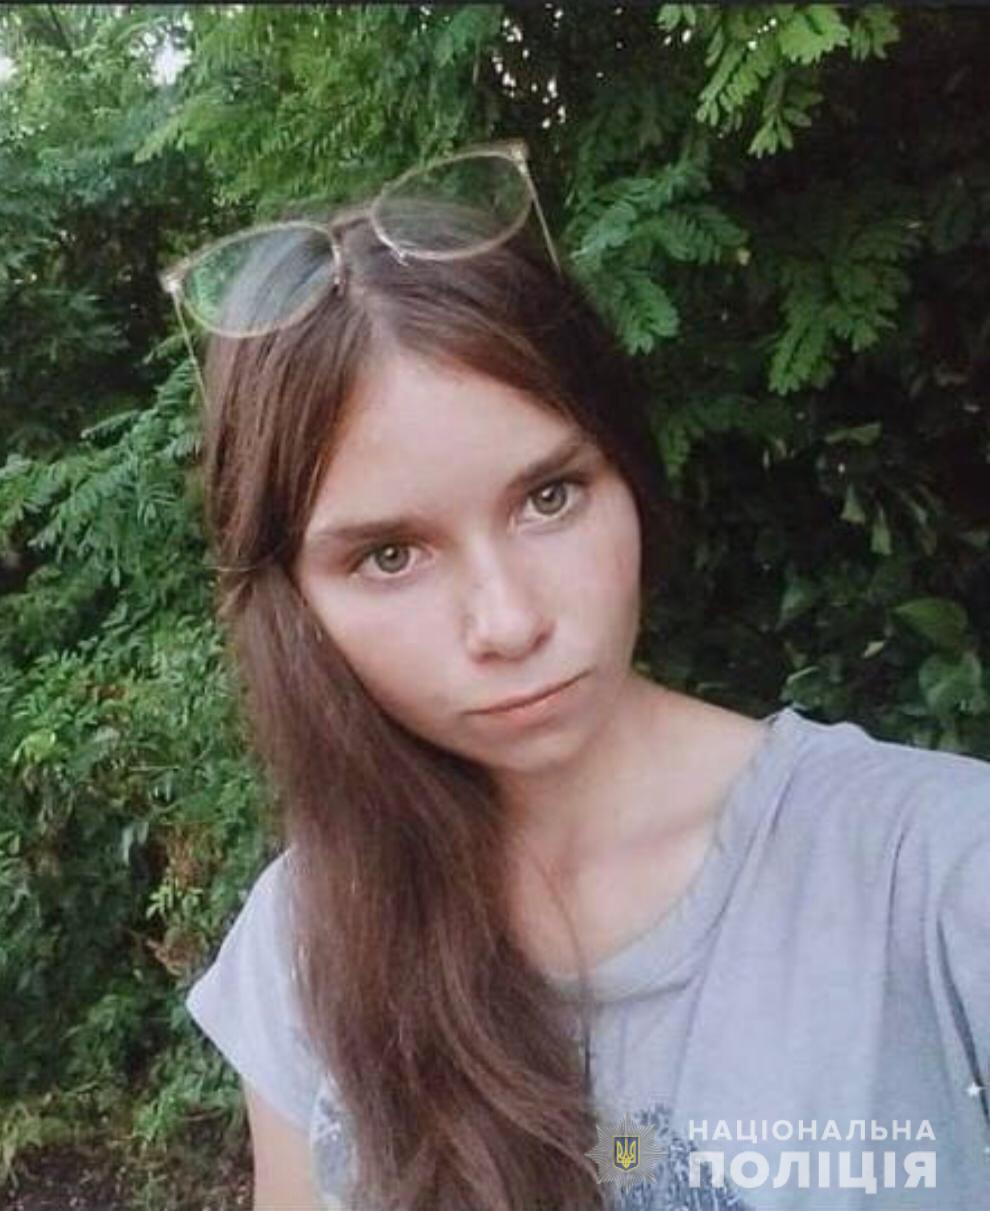 Тело бросили в колодец: возле Кропивницкого нашли пропавшую 16-летнюю девушку (ФОТО) - фото 2